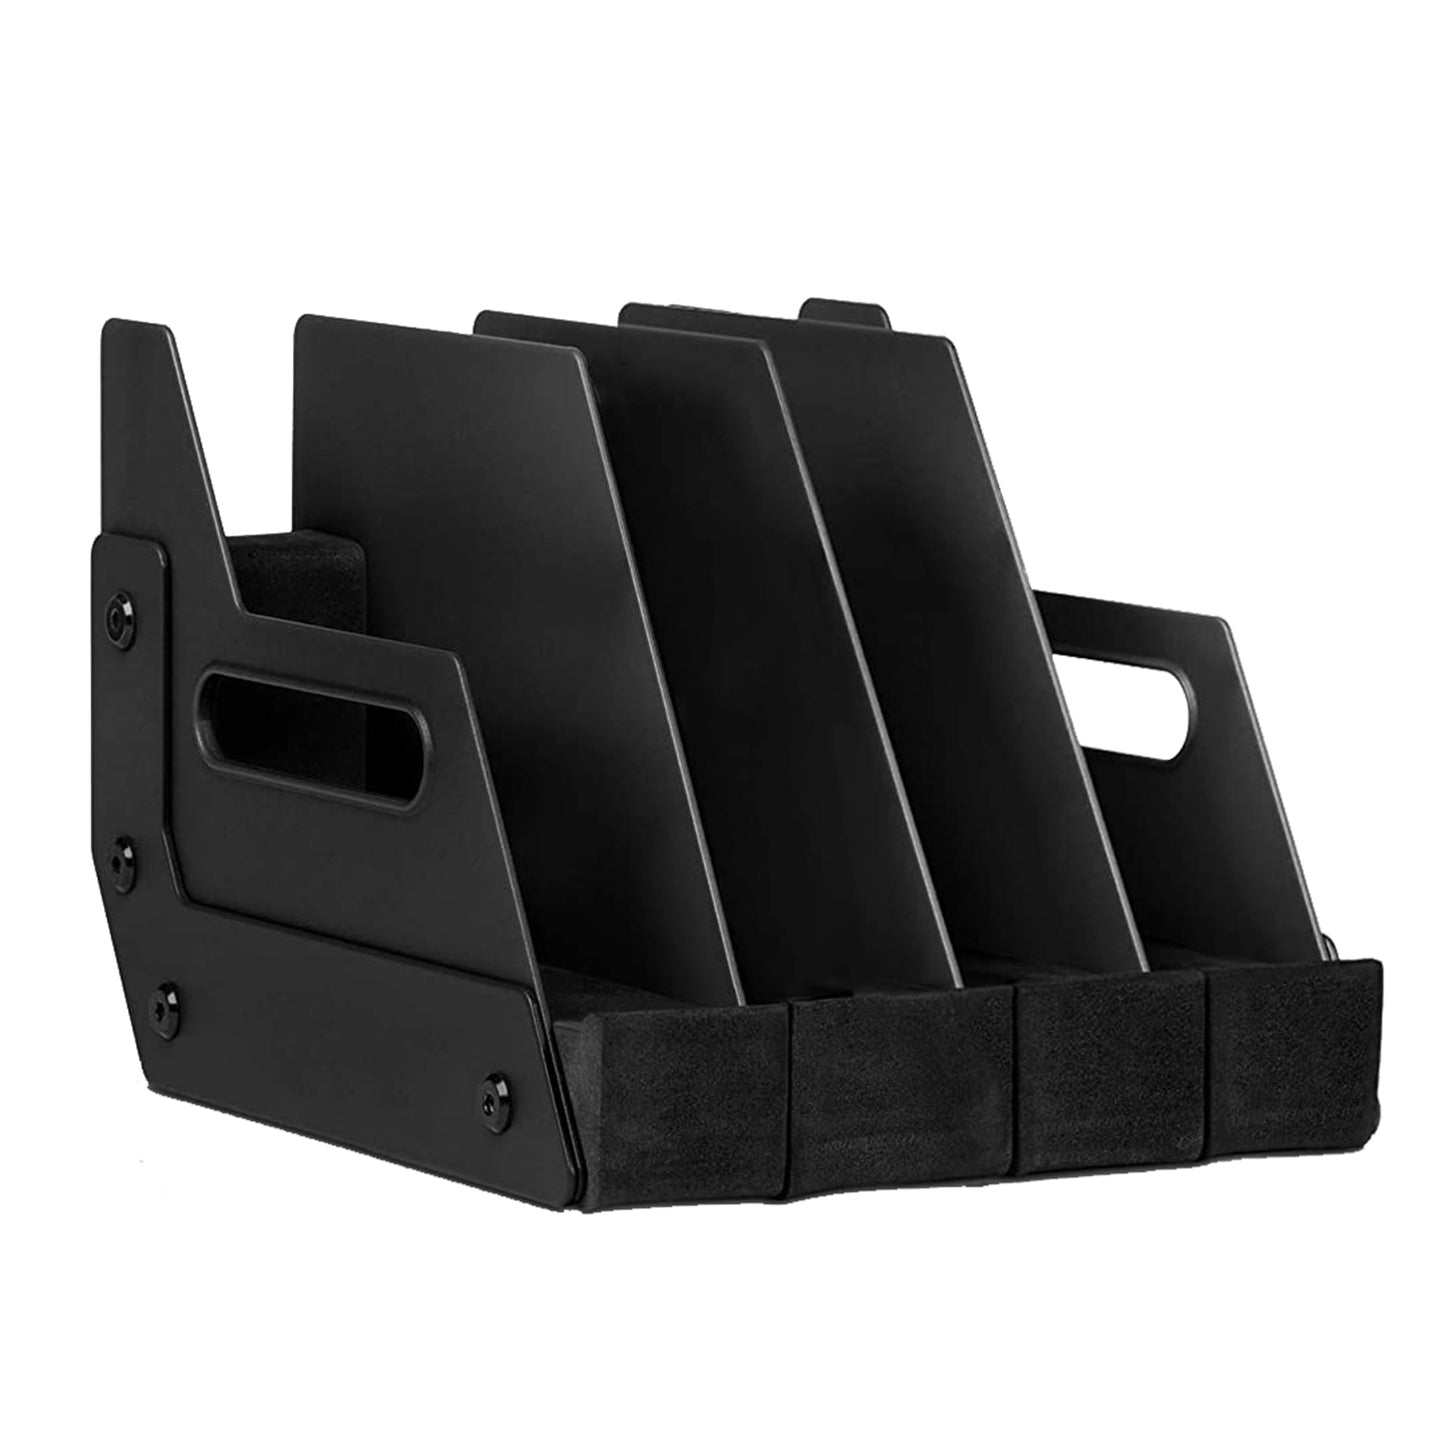 4 Pistol Racks Handgun Display Storage